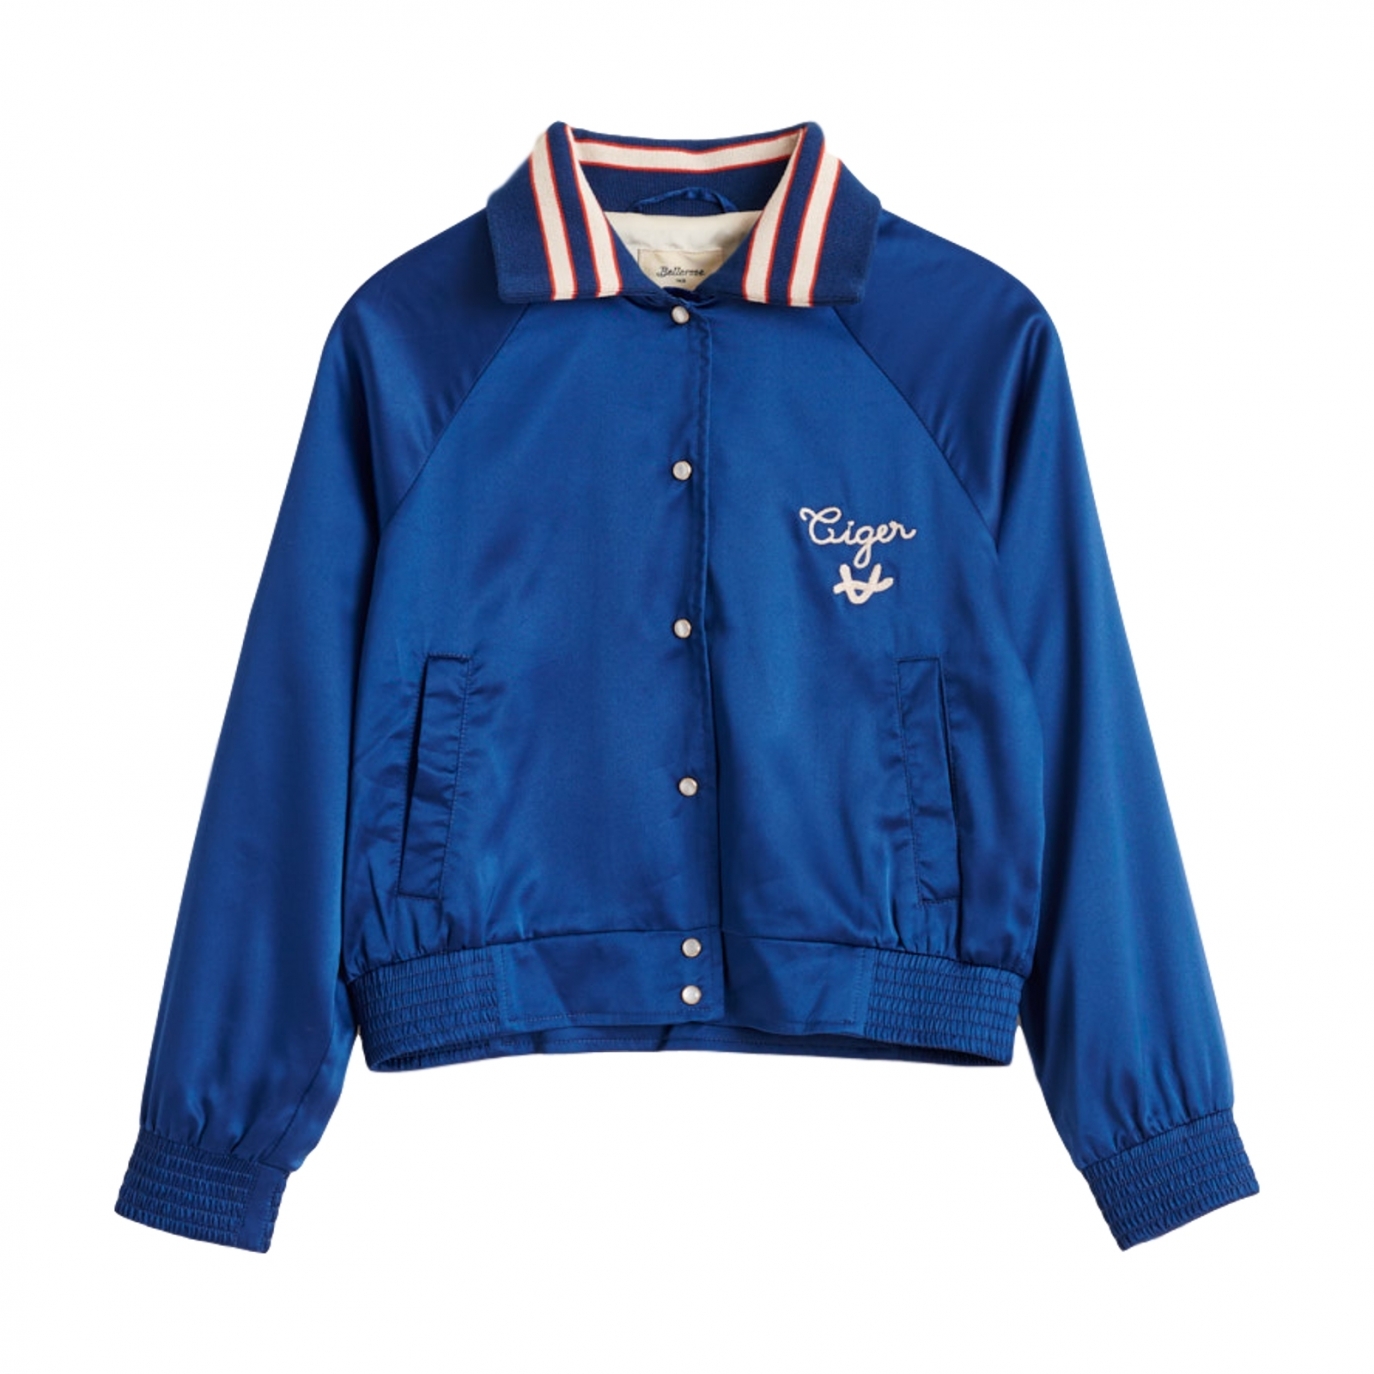 Bellerose - Joker Jacket Blue - Coats, jackets & coveralls - BK201504 P1253 